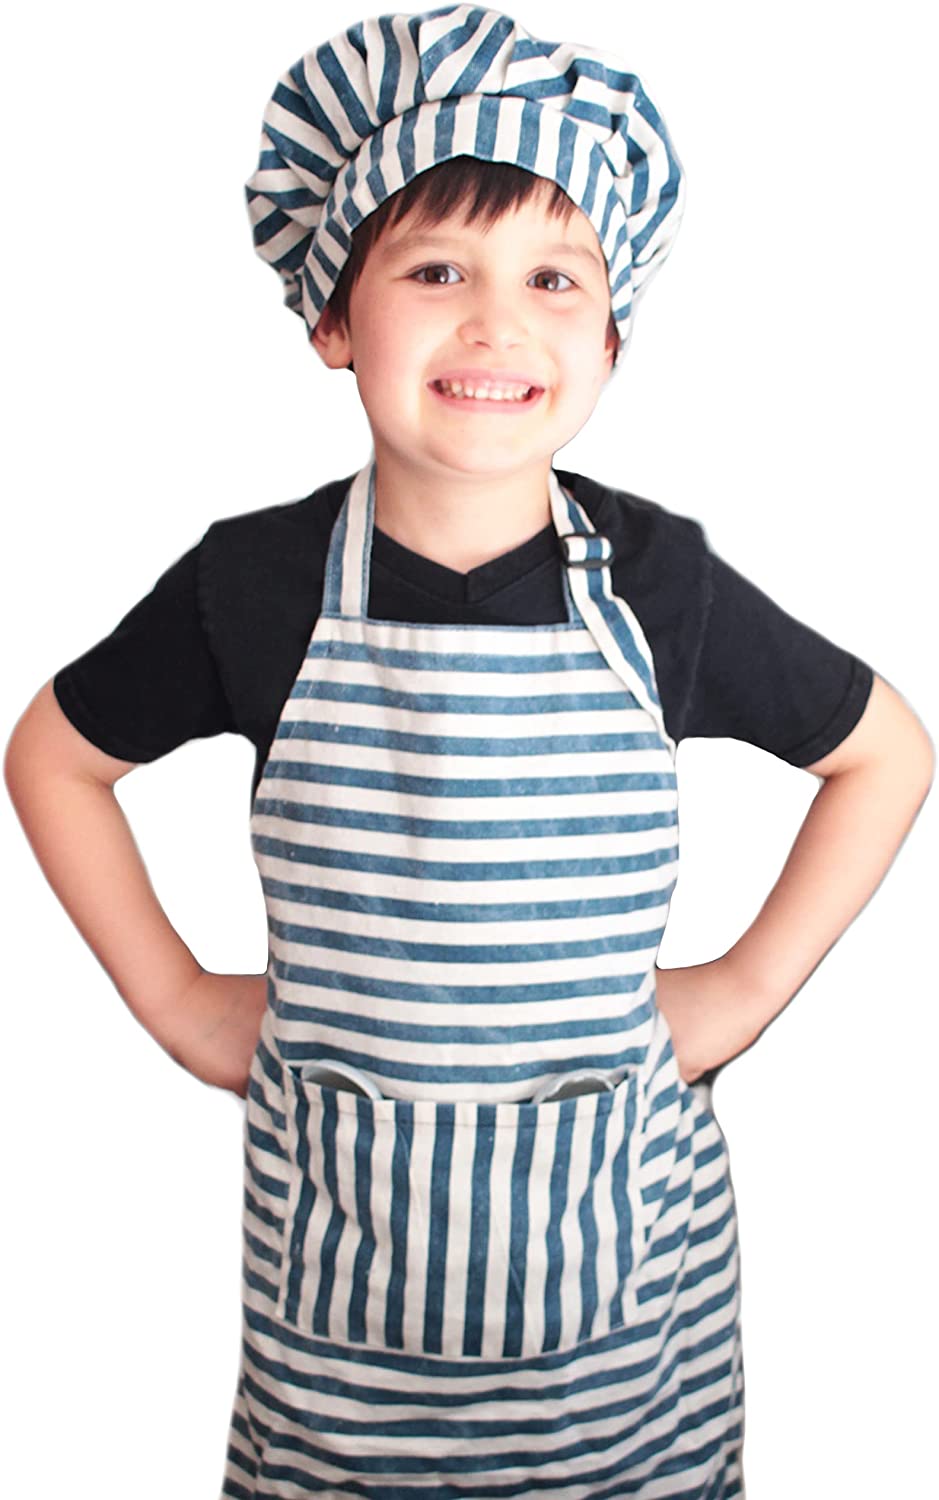 Pink Polka Dot Dapper&Doll Toddler Apron & Chef Hat Gift Set for Little Girls Age 2-4 